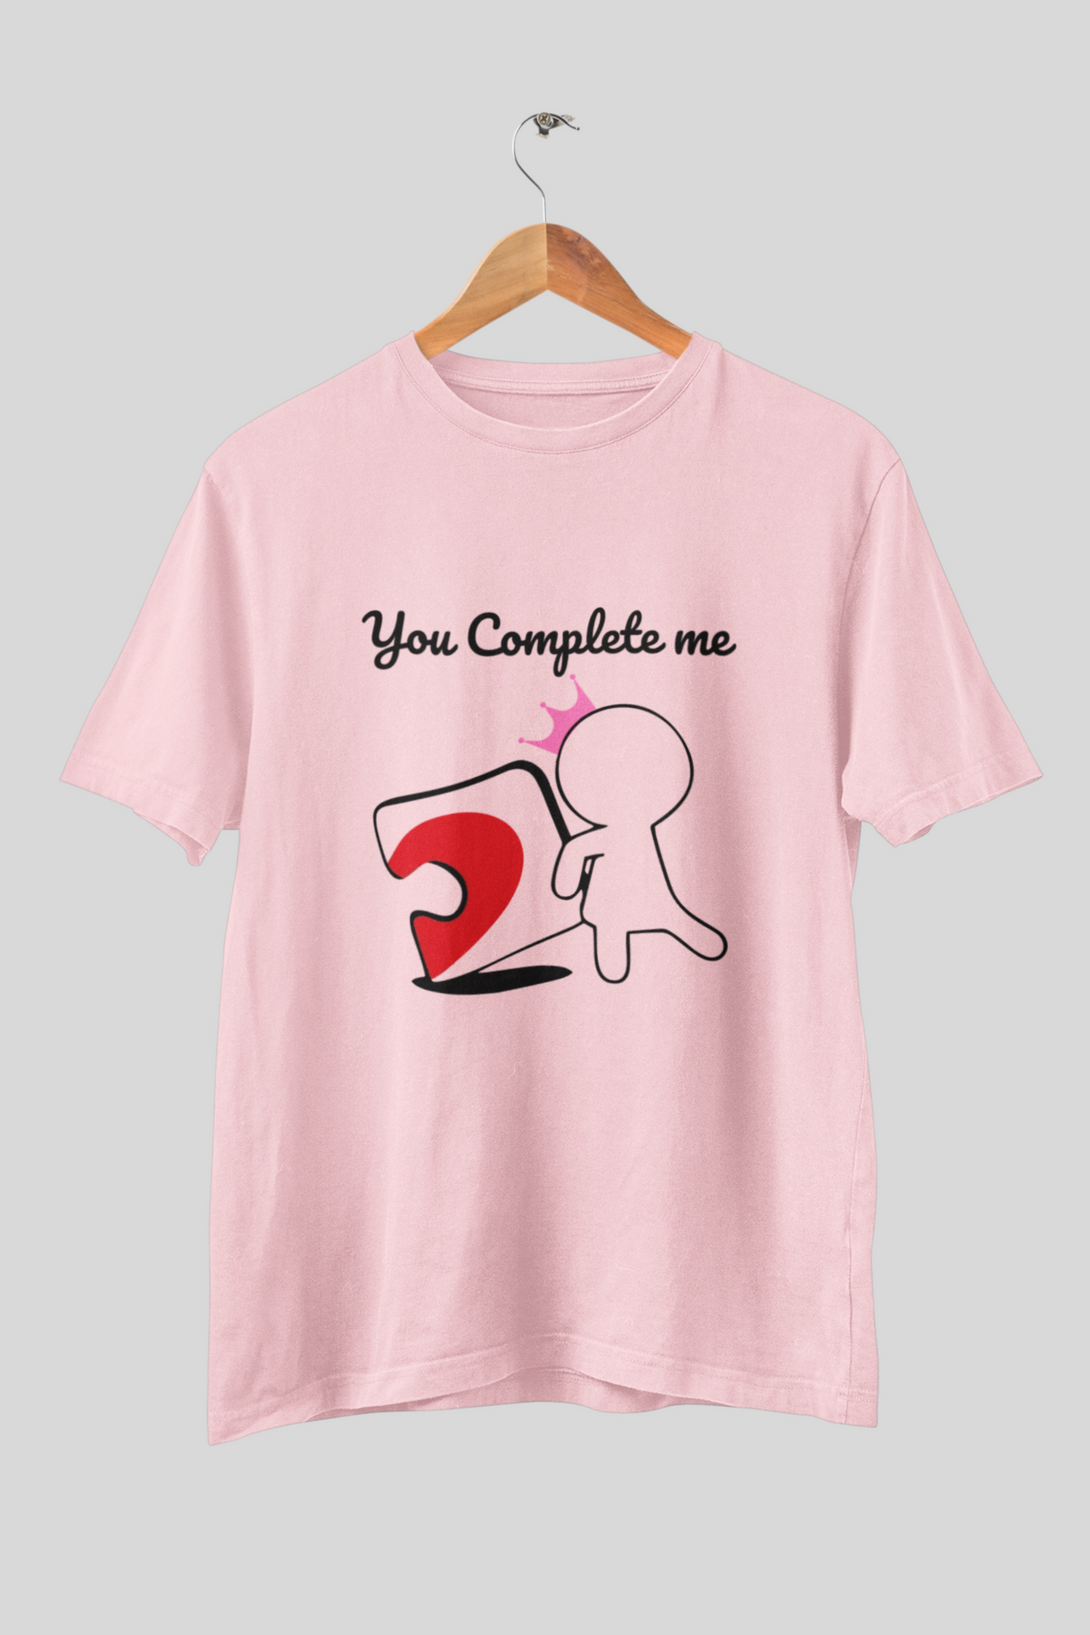 You Complete Me Couple T Shirt - WowWaves - 5